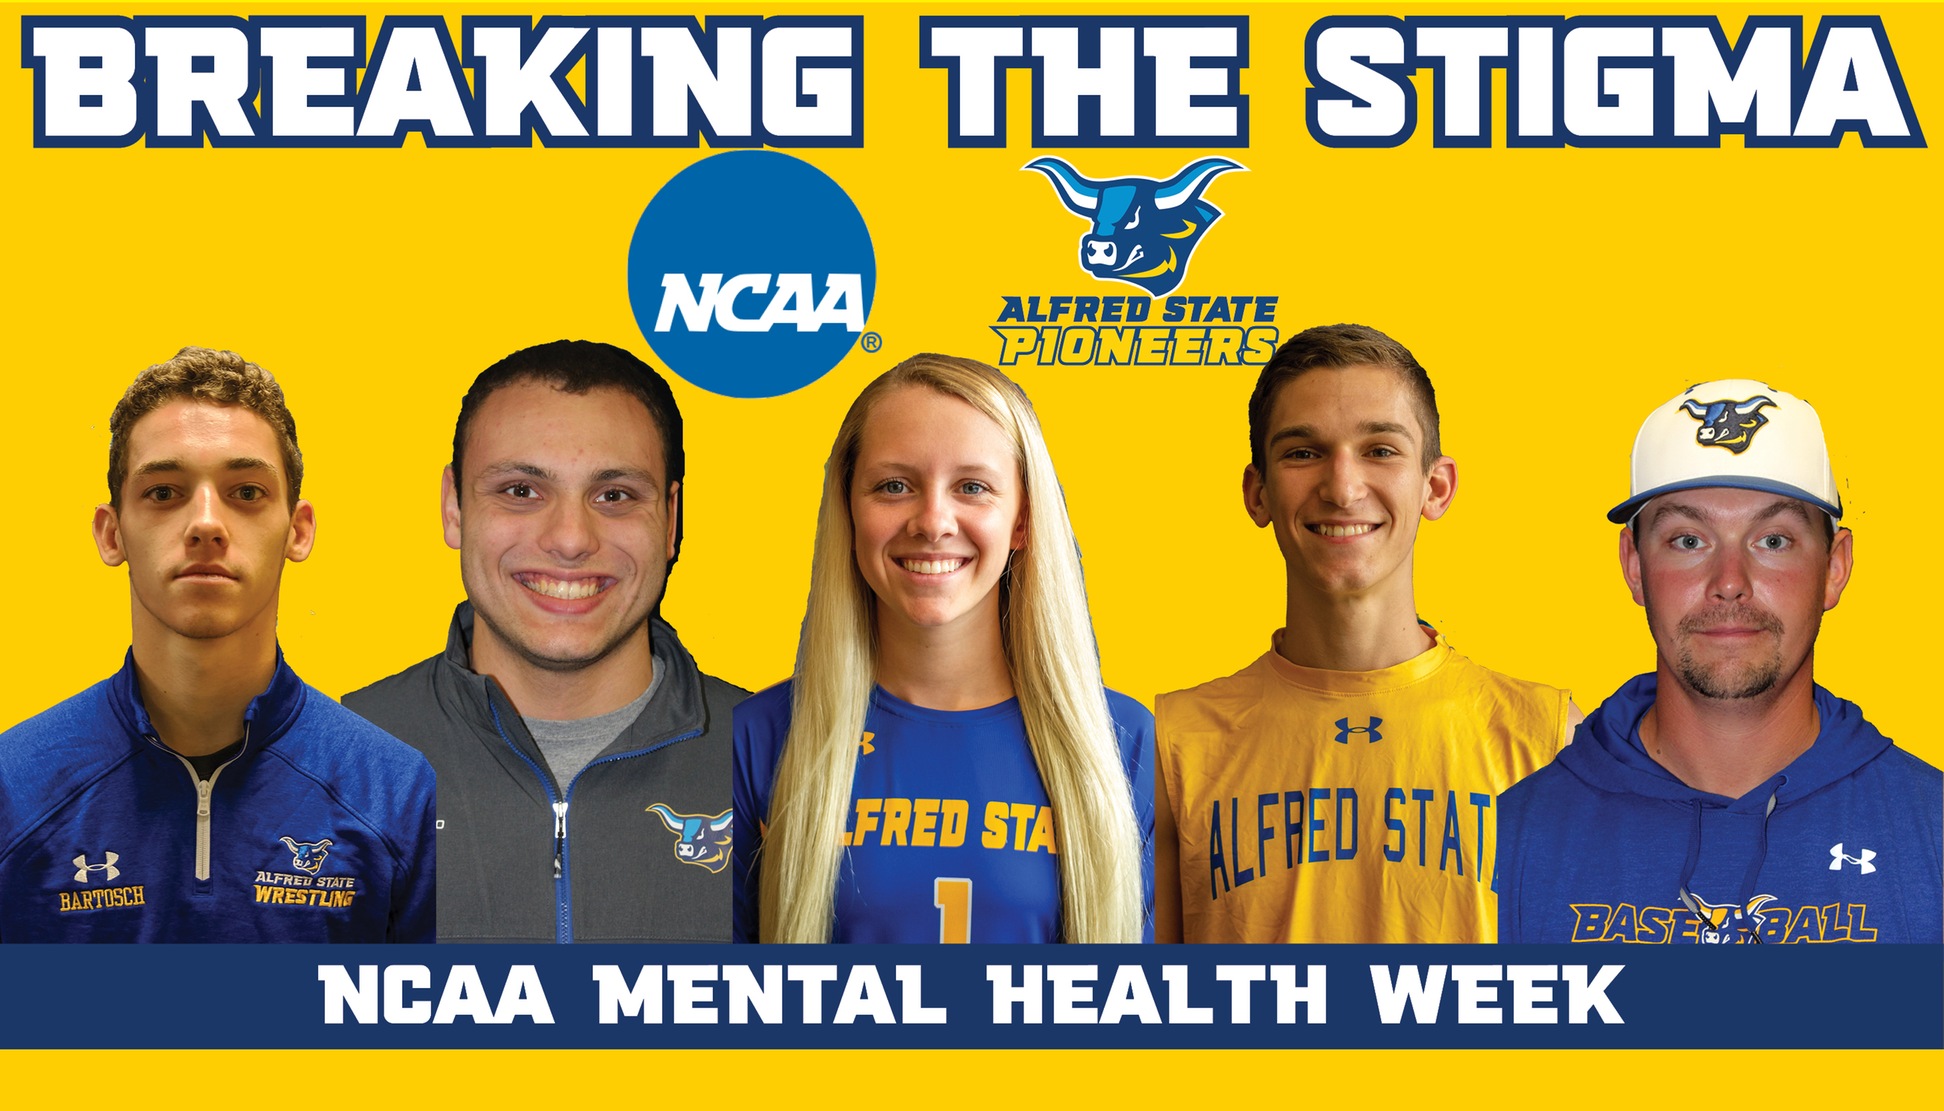 NCAA Mental Health Week - Breaking the Stigma